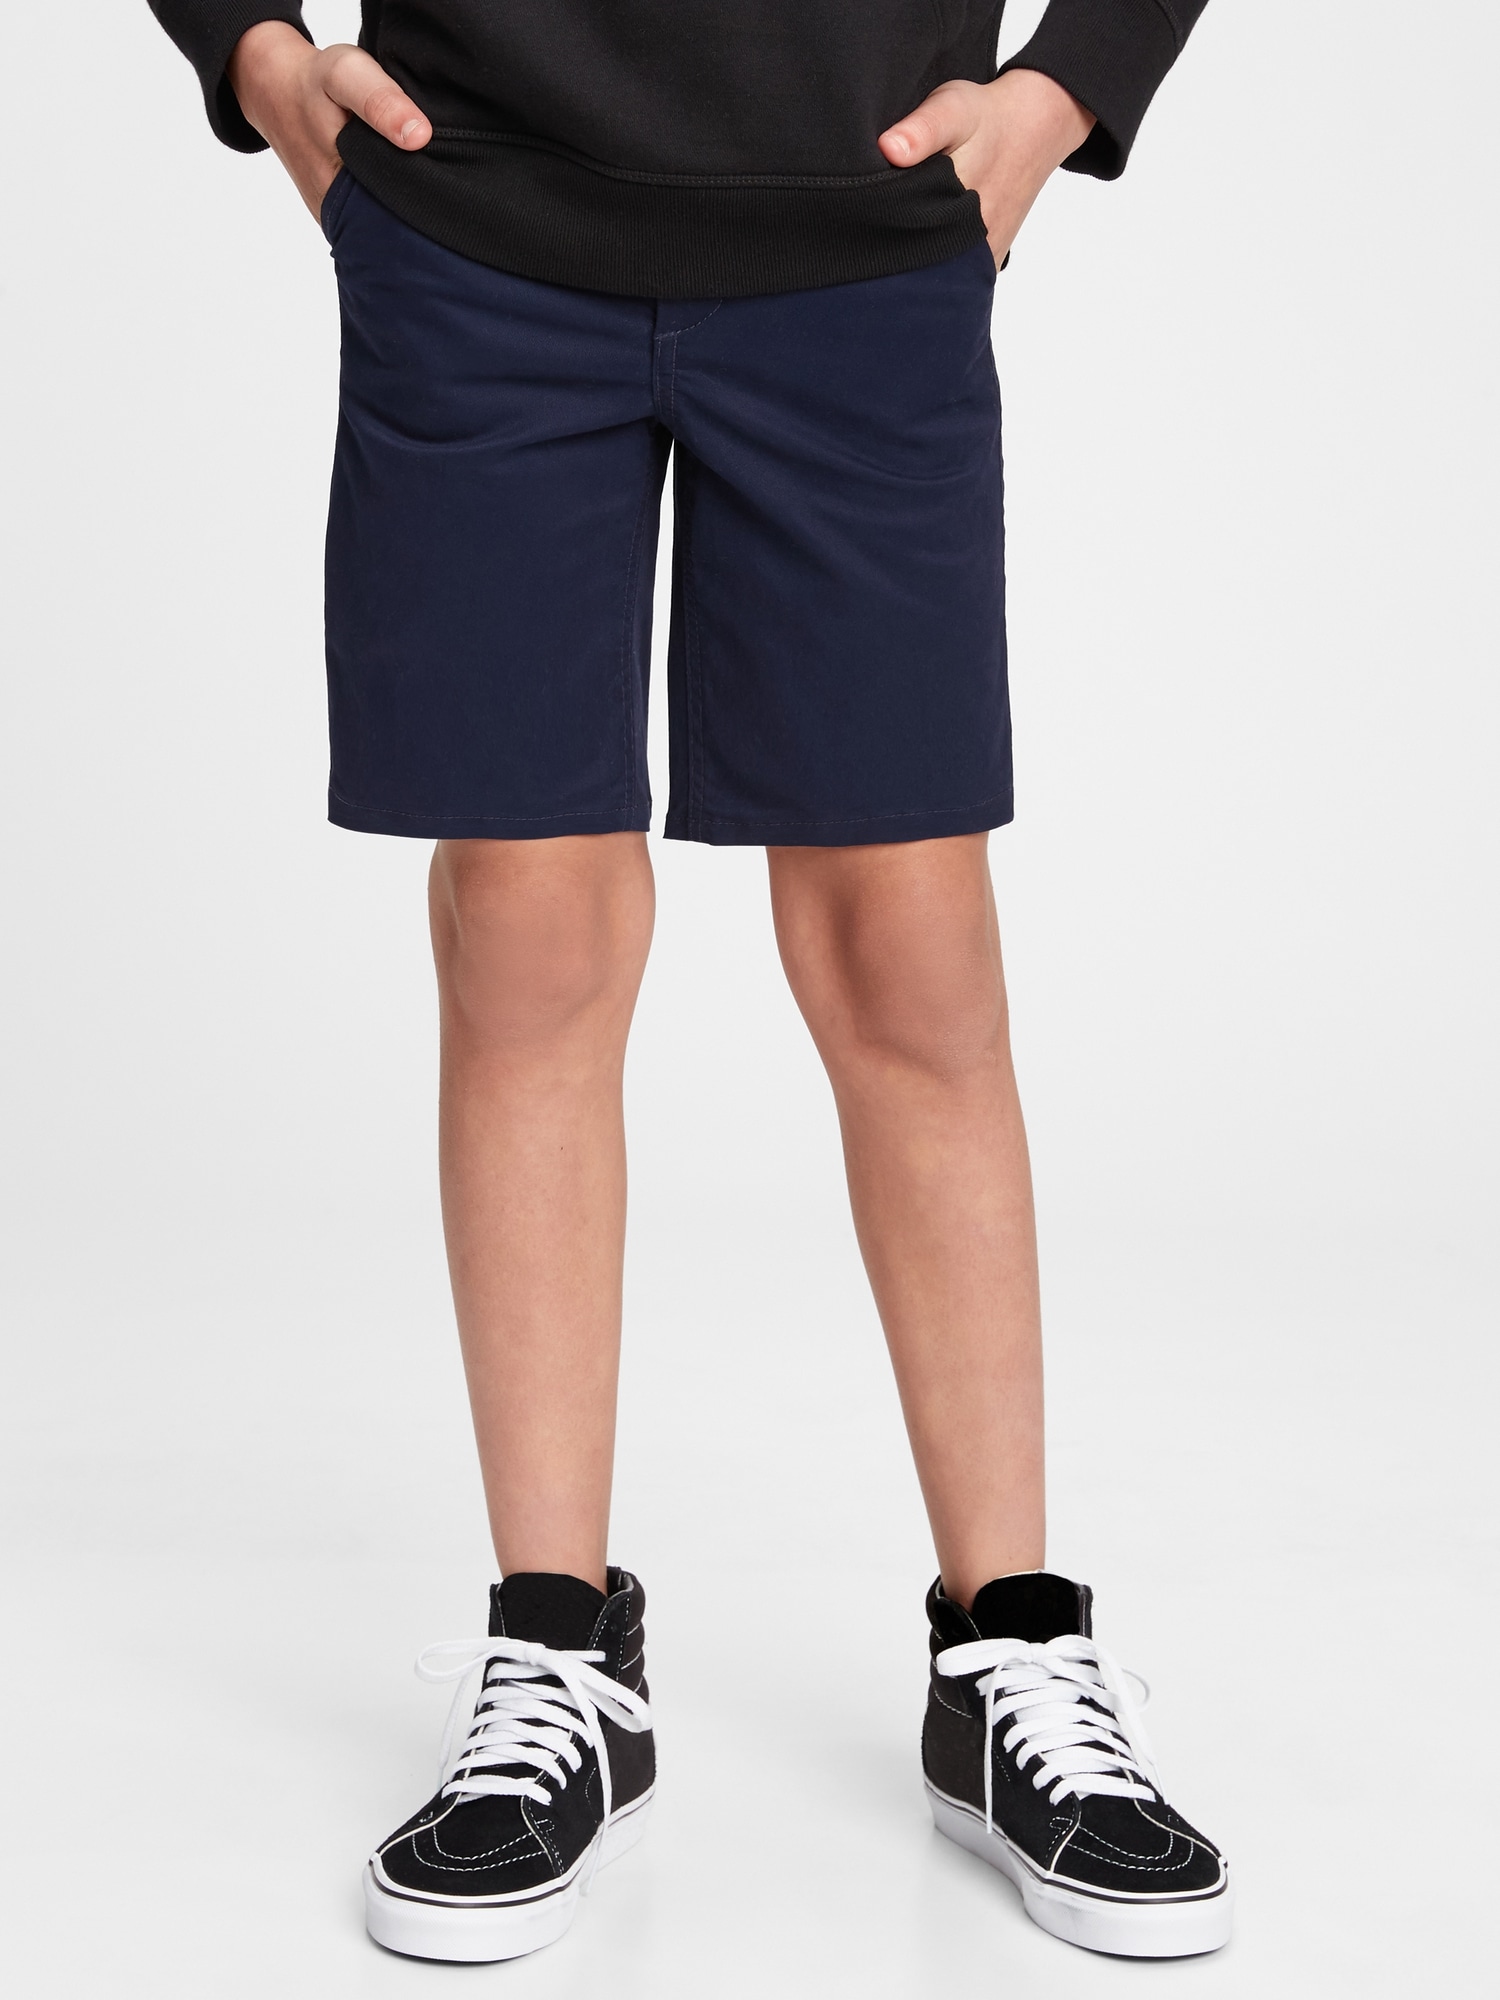 Kids Uniform Dressy Shorts with Washwell | Gap